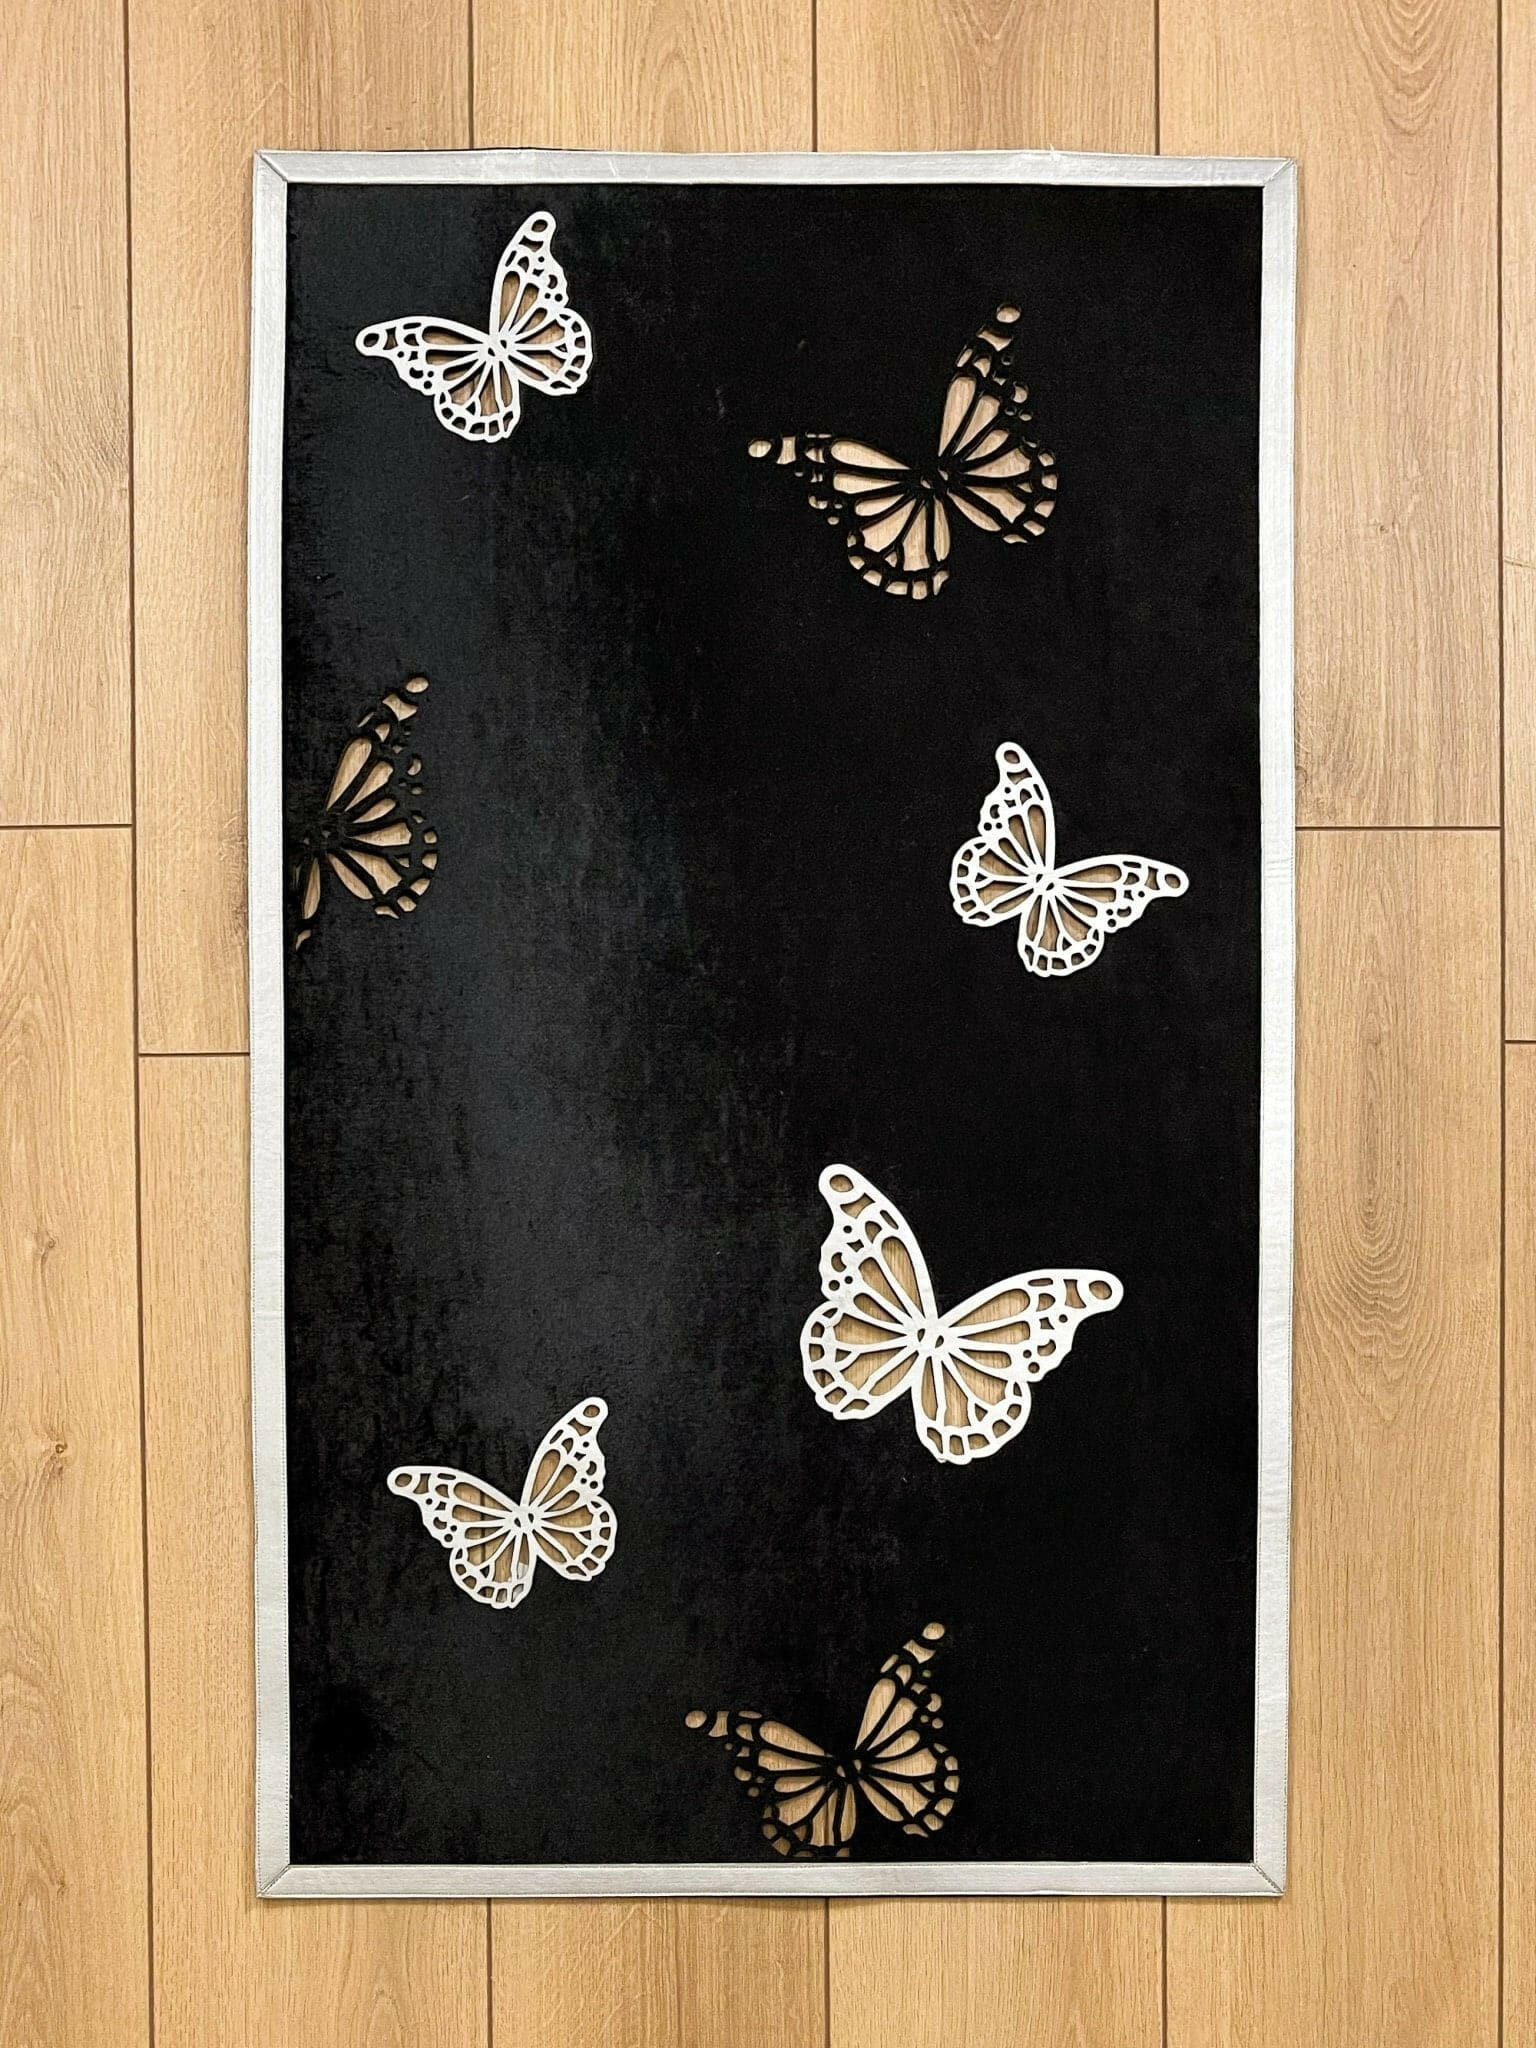 Kelebek Limited Edition Black & Silver Color Rectangular Rug - Creative Home Designs, Butterfly Luxury Turkish Carpet, Non Slip Washable Velvet Mat